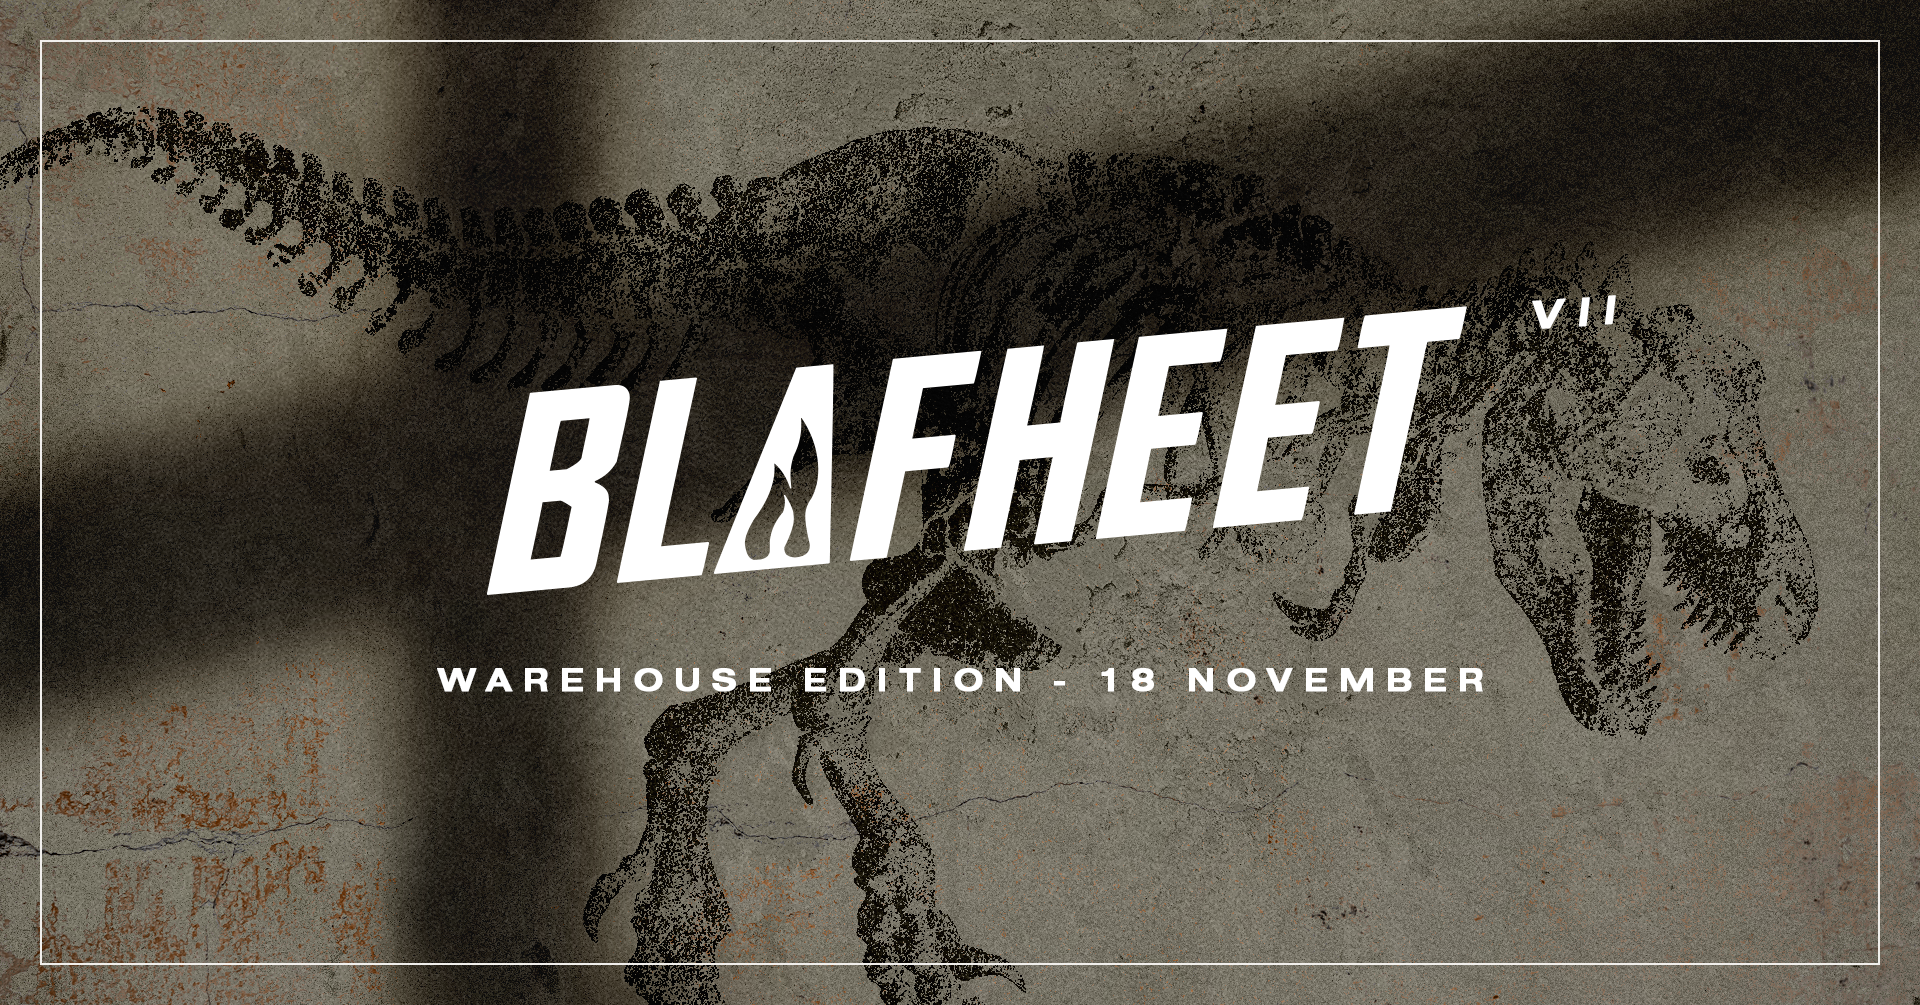 Blafheet VII - Warehouse Edition - Página trasera